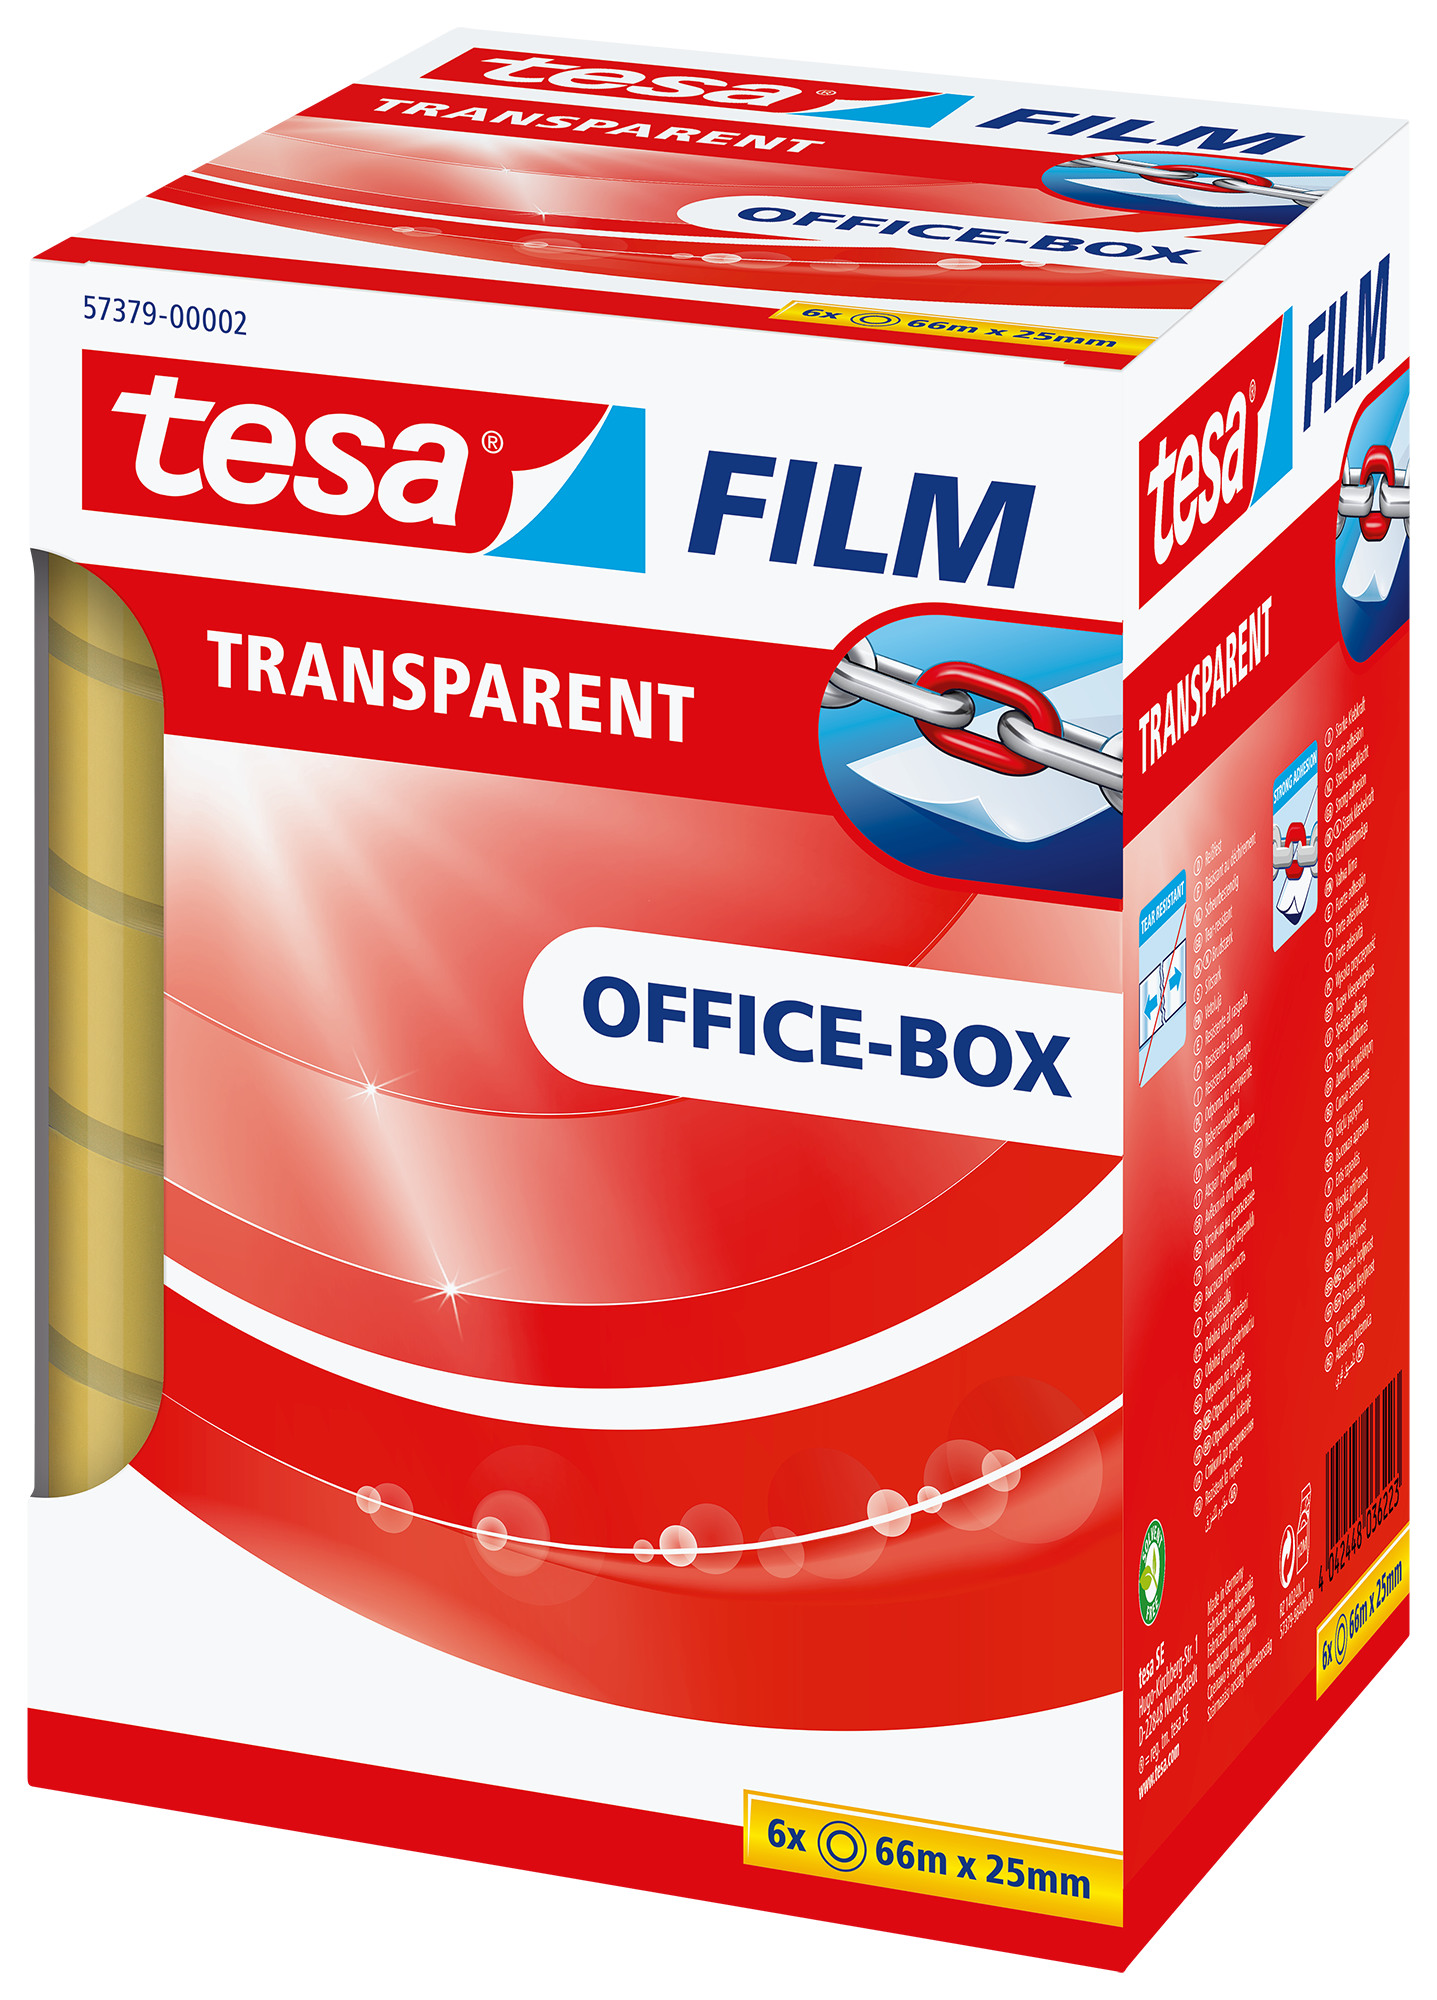 TESA tesafilm transparent 25mmx66m 573790000 5 rl. + 1 rl. in Office-Box